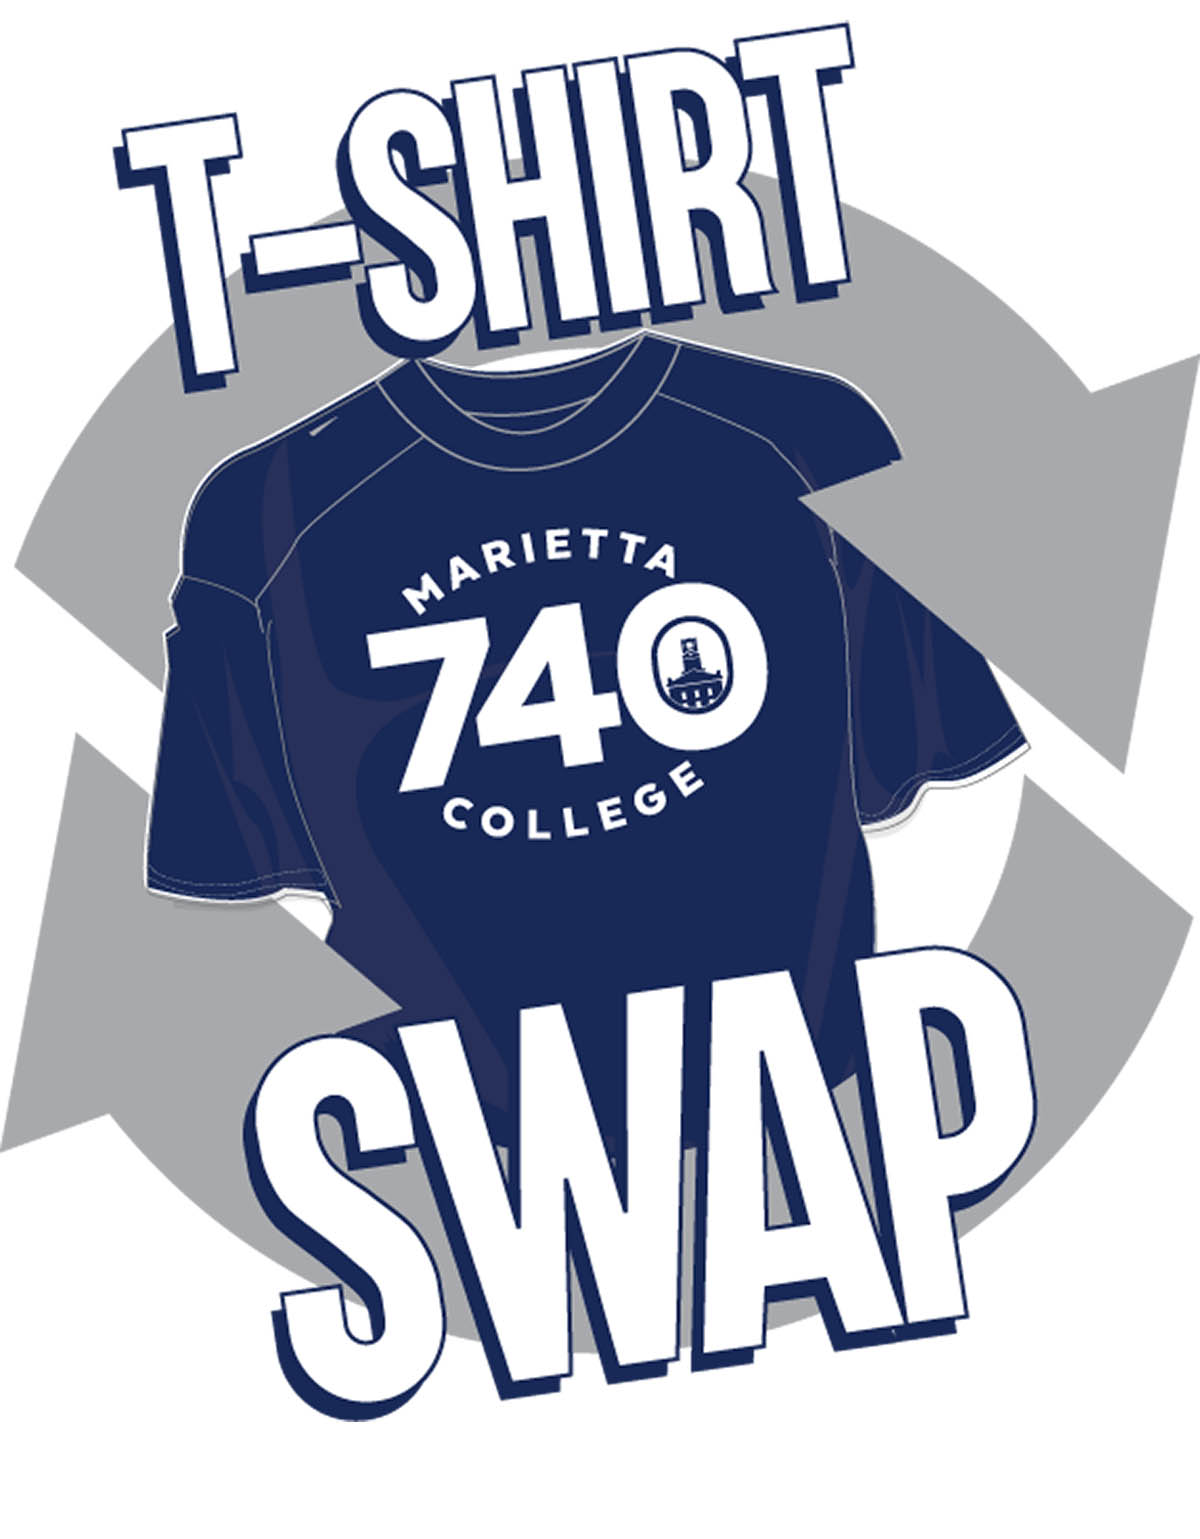 T-shirt swap logo